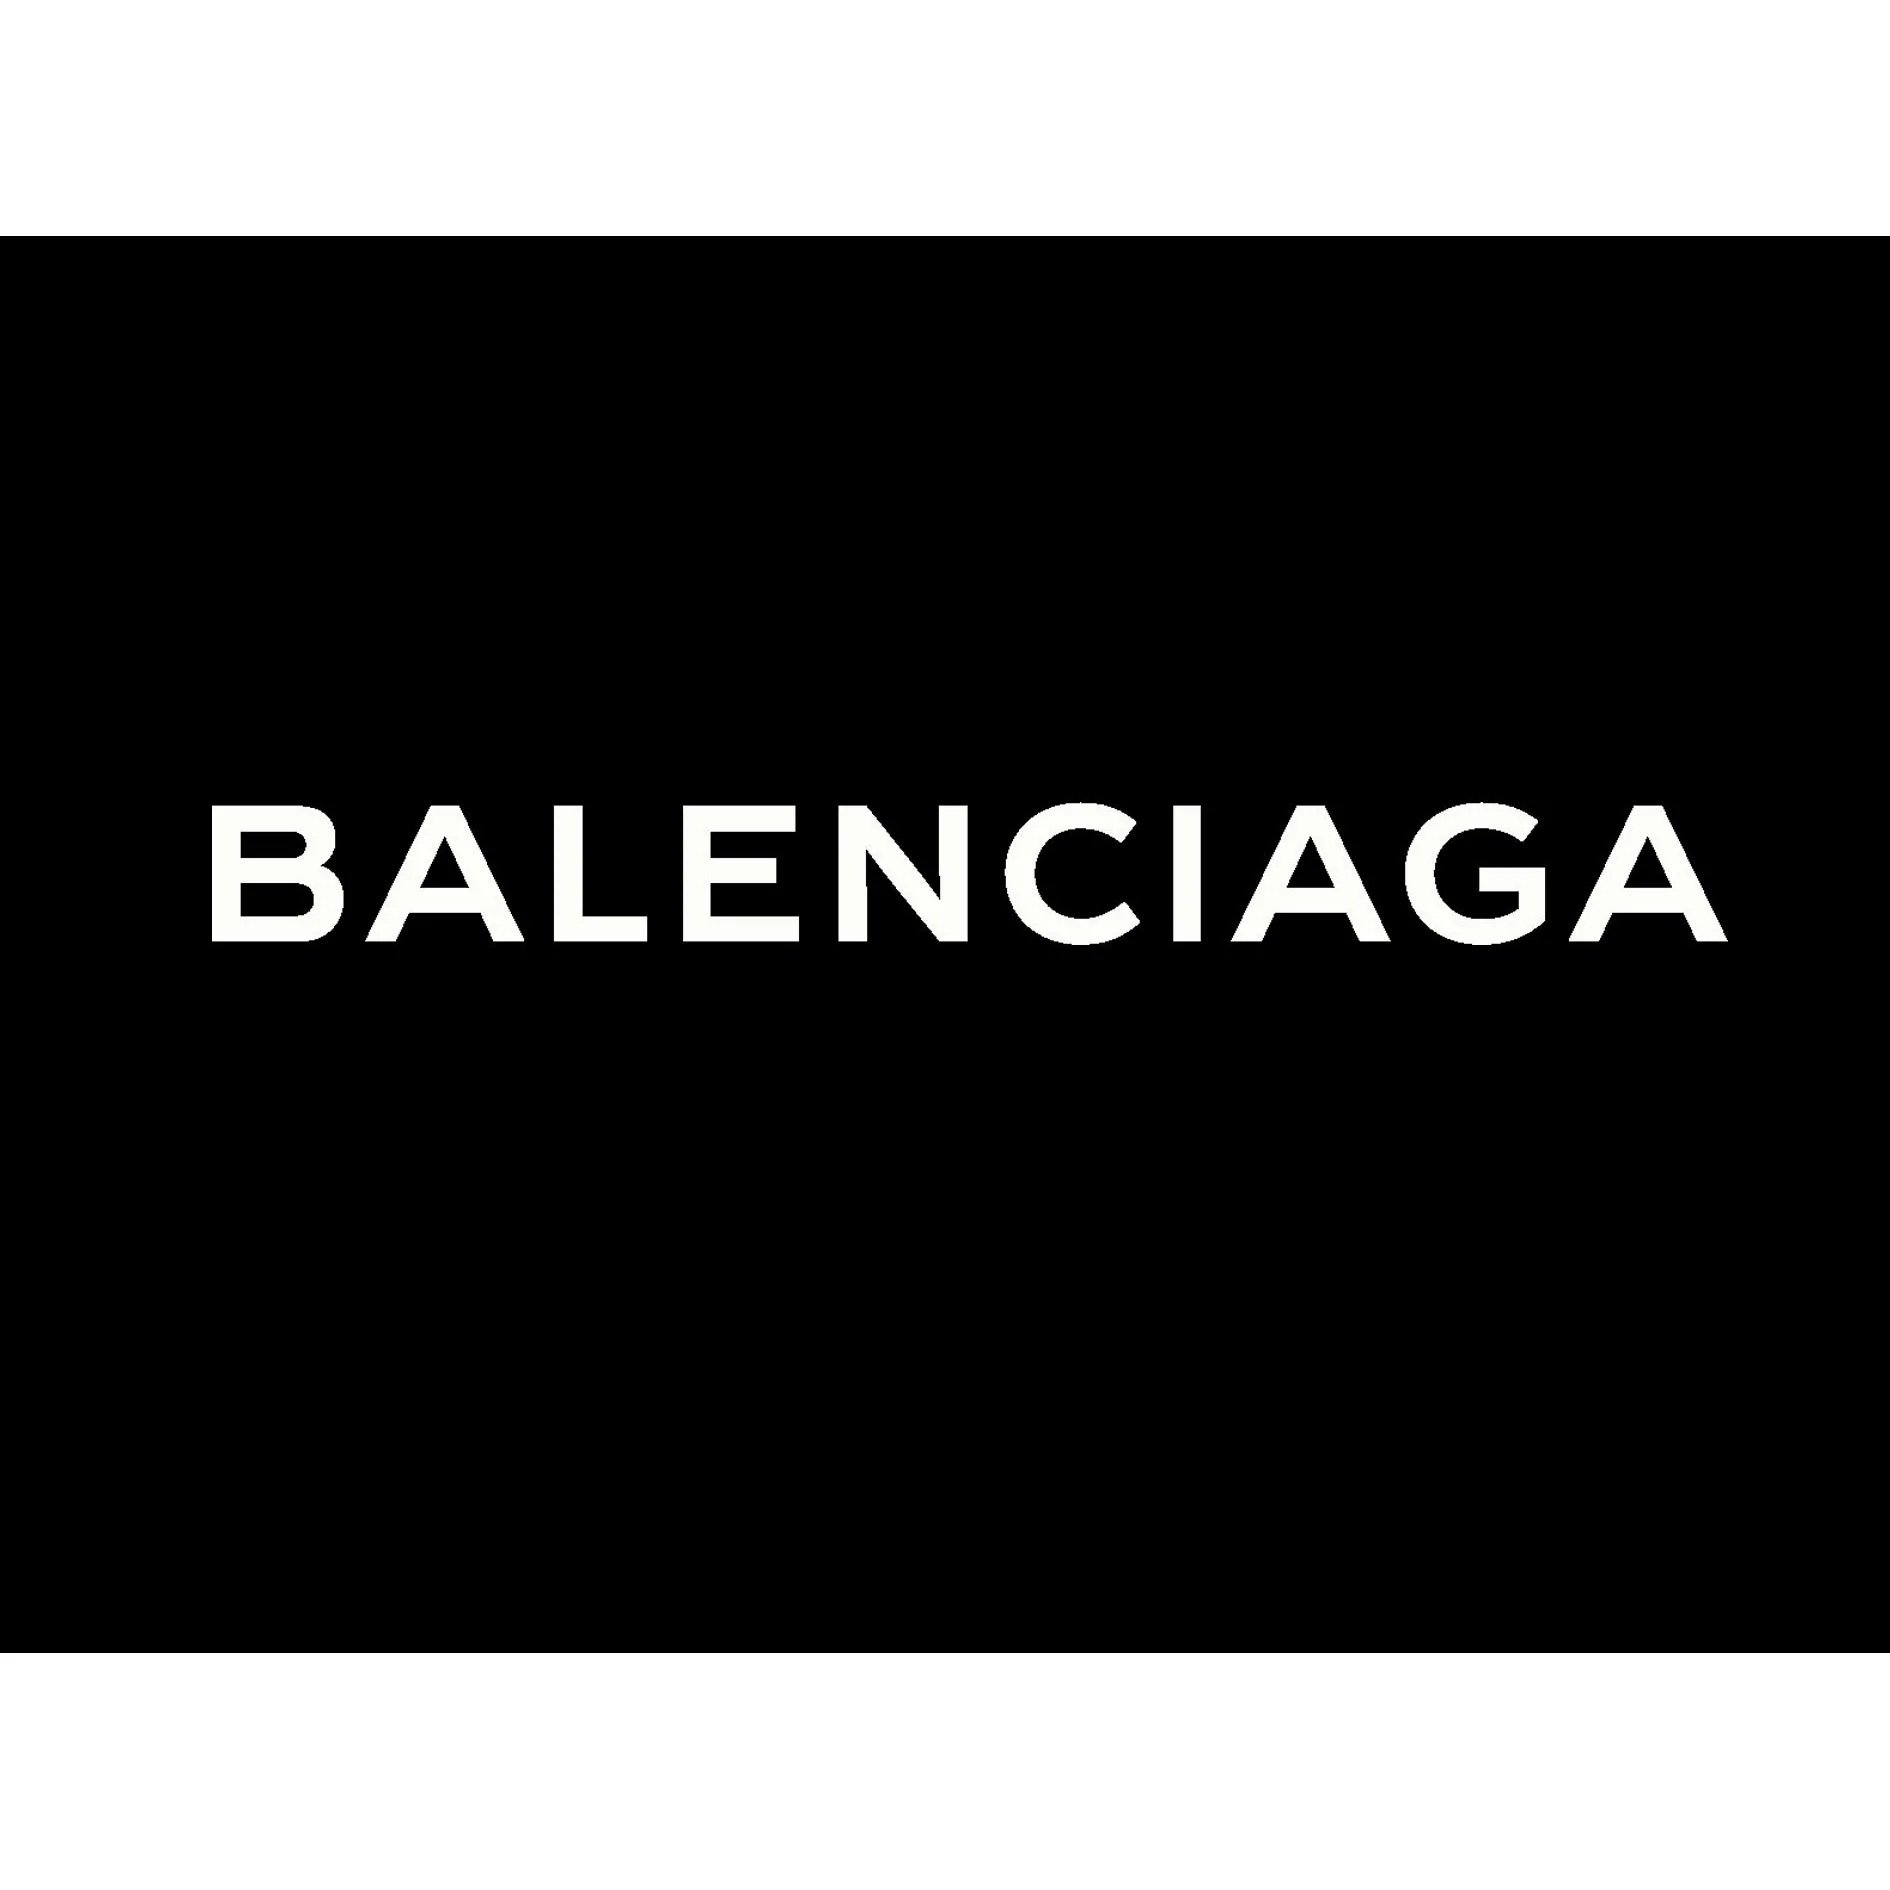 Balenciaga designer sorry for 'inappropriate' campaign featuring